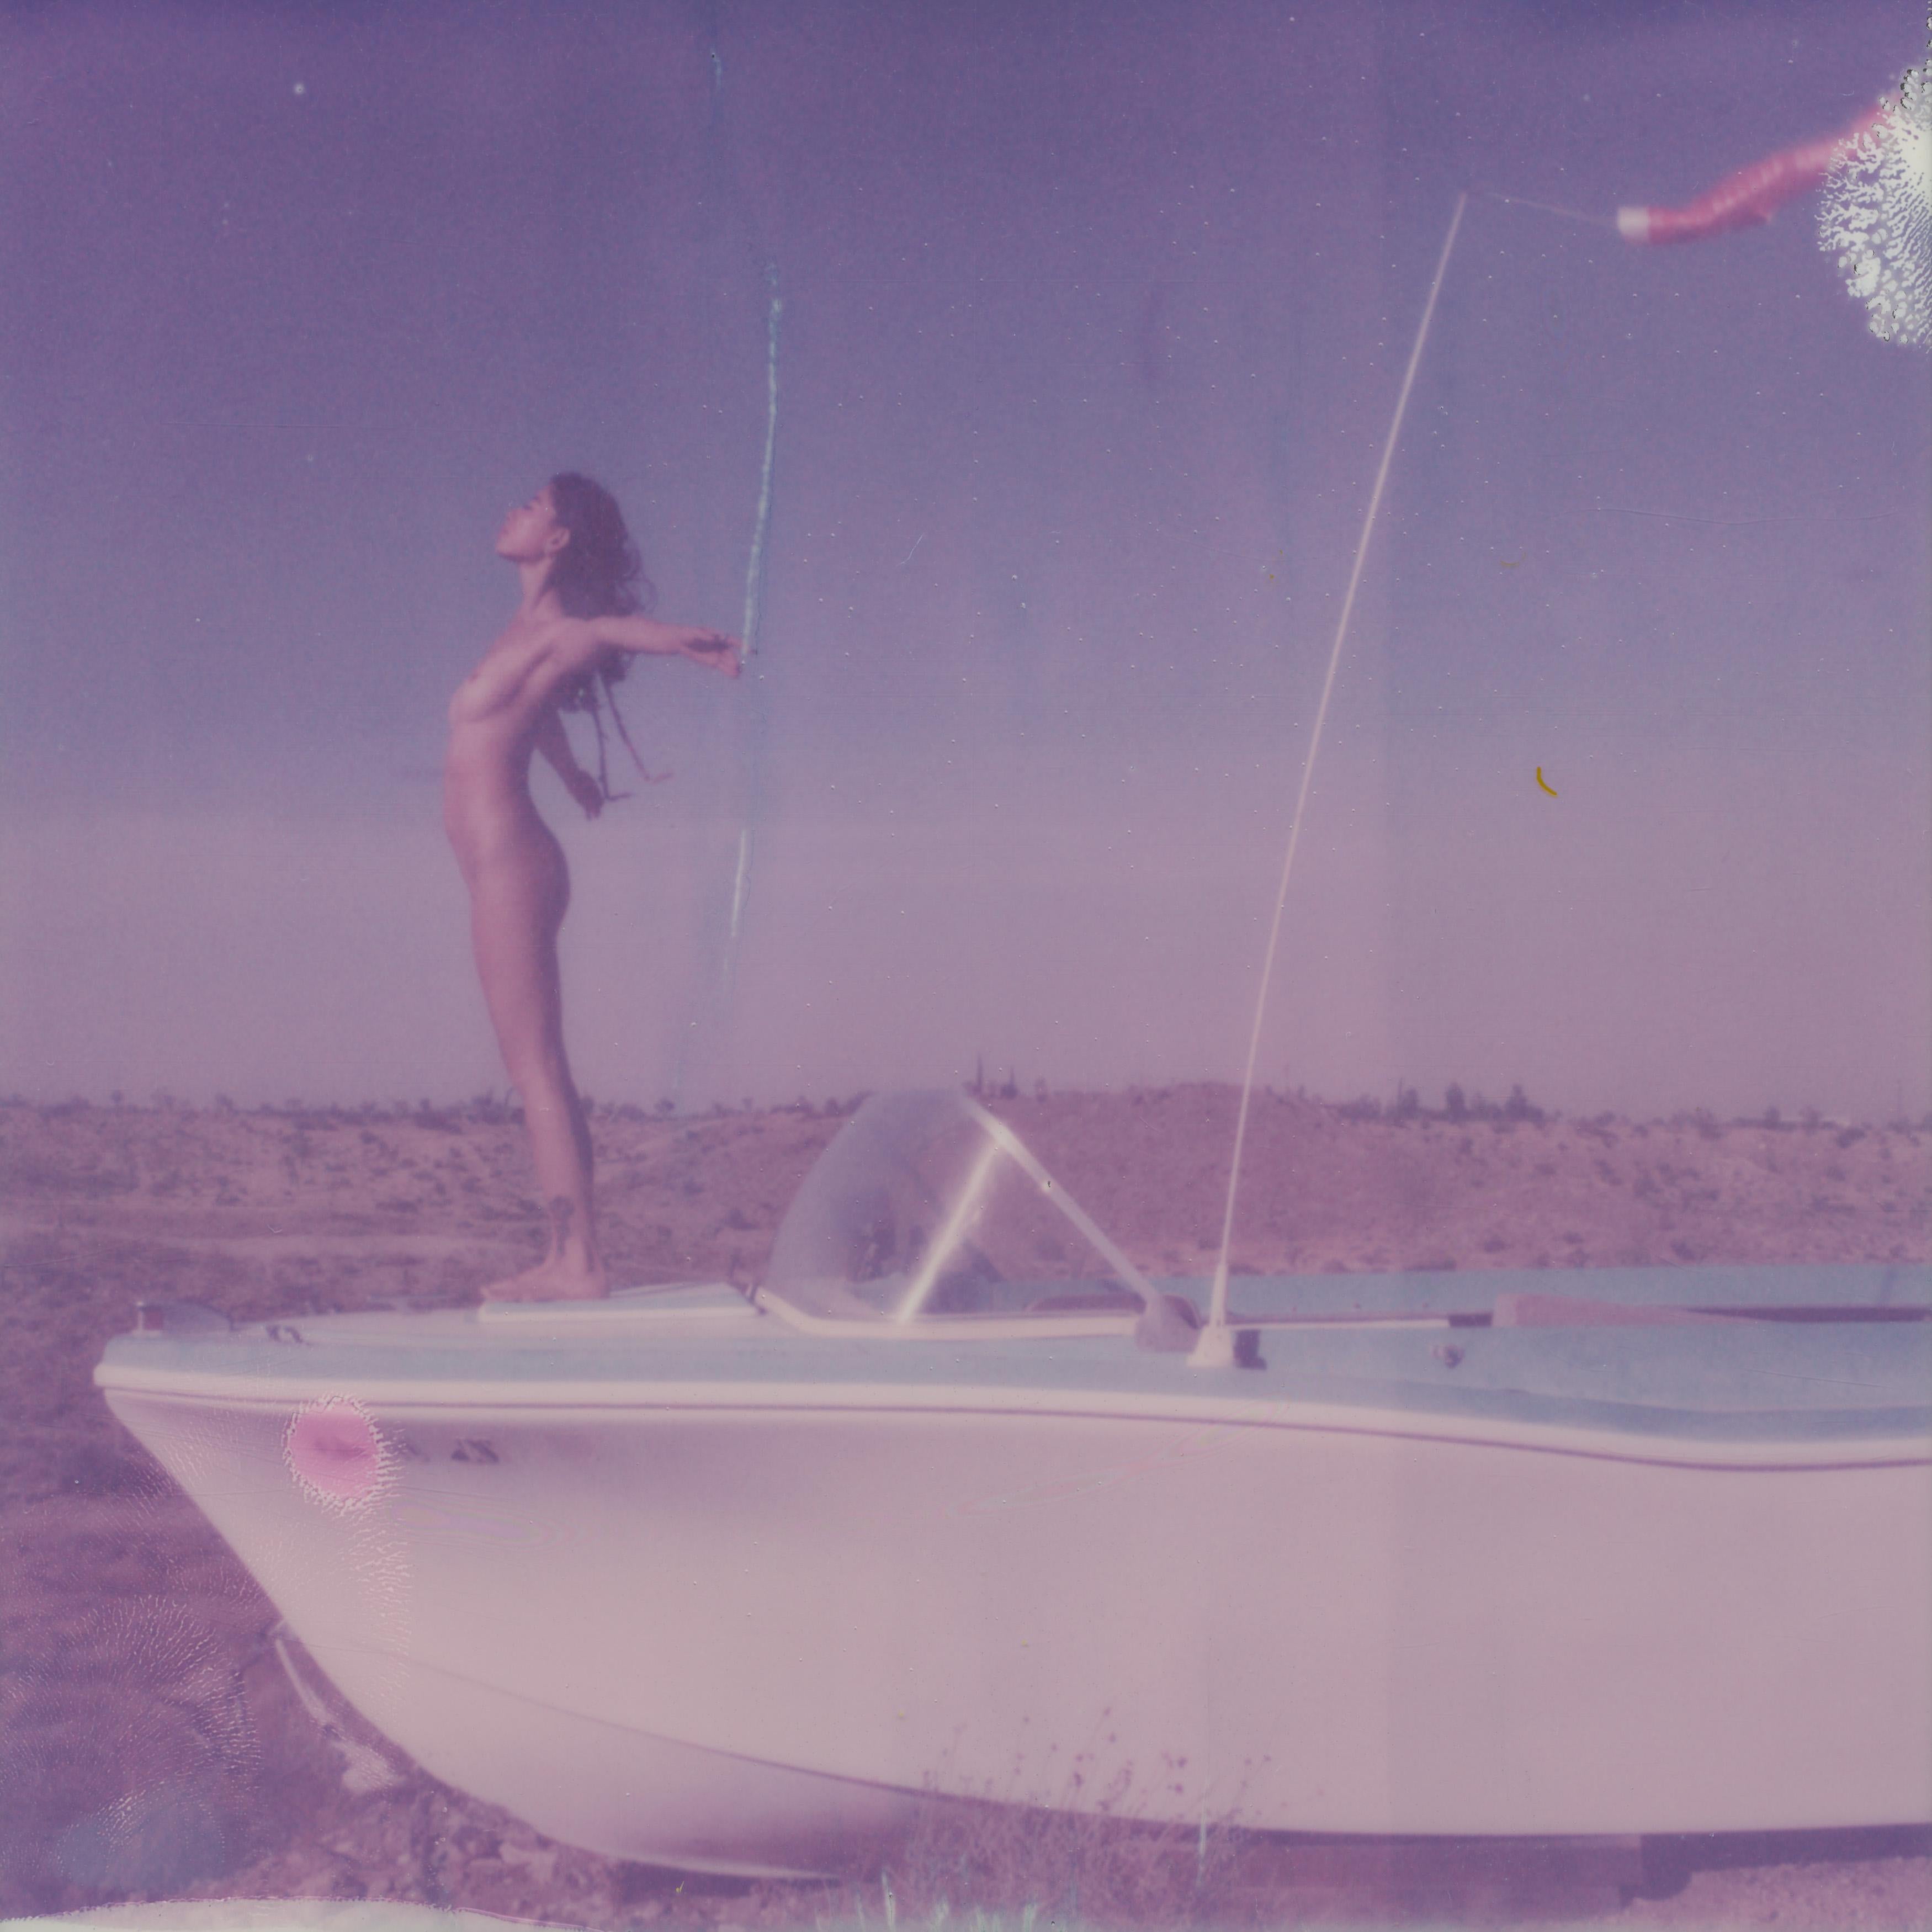 Color Photograph Kirsten Thys van den Audenaerde - Boat to Nowhere - Contemporary, Polaroid, nu, XXIe siècle, Joshua Tree